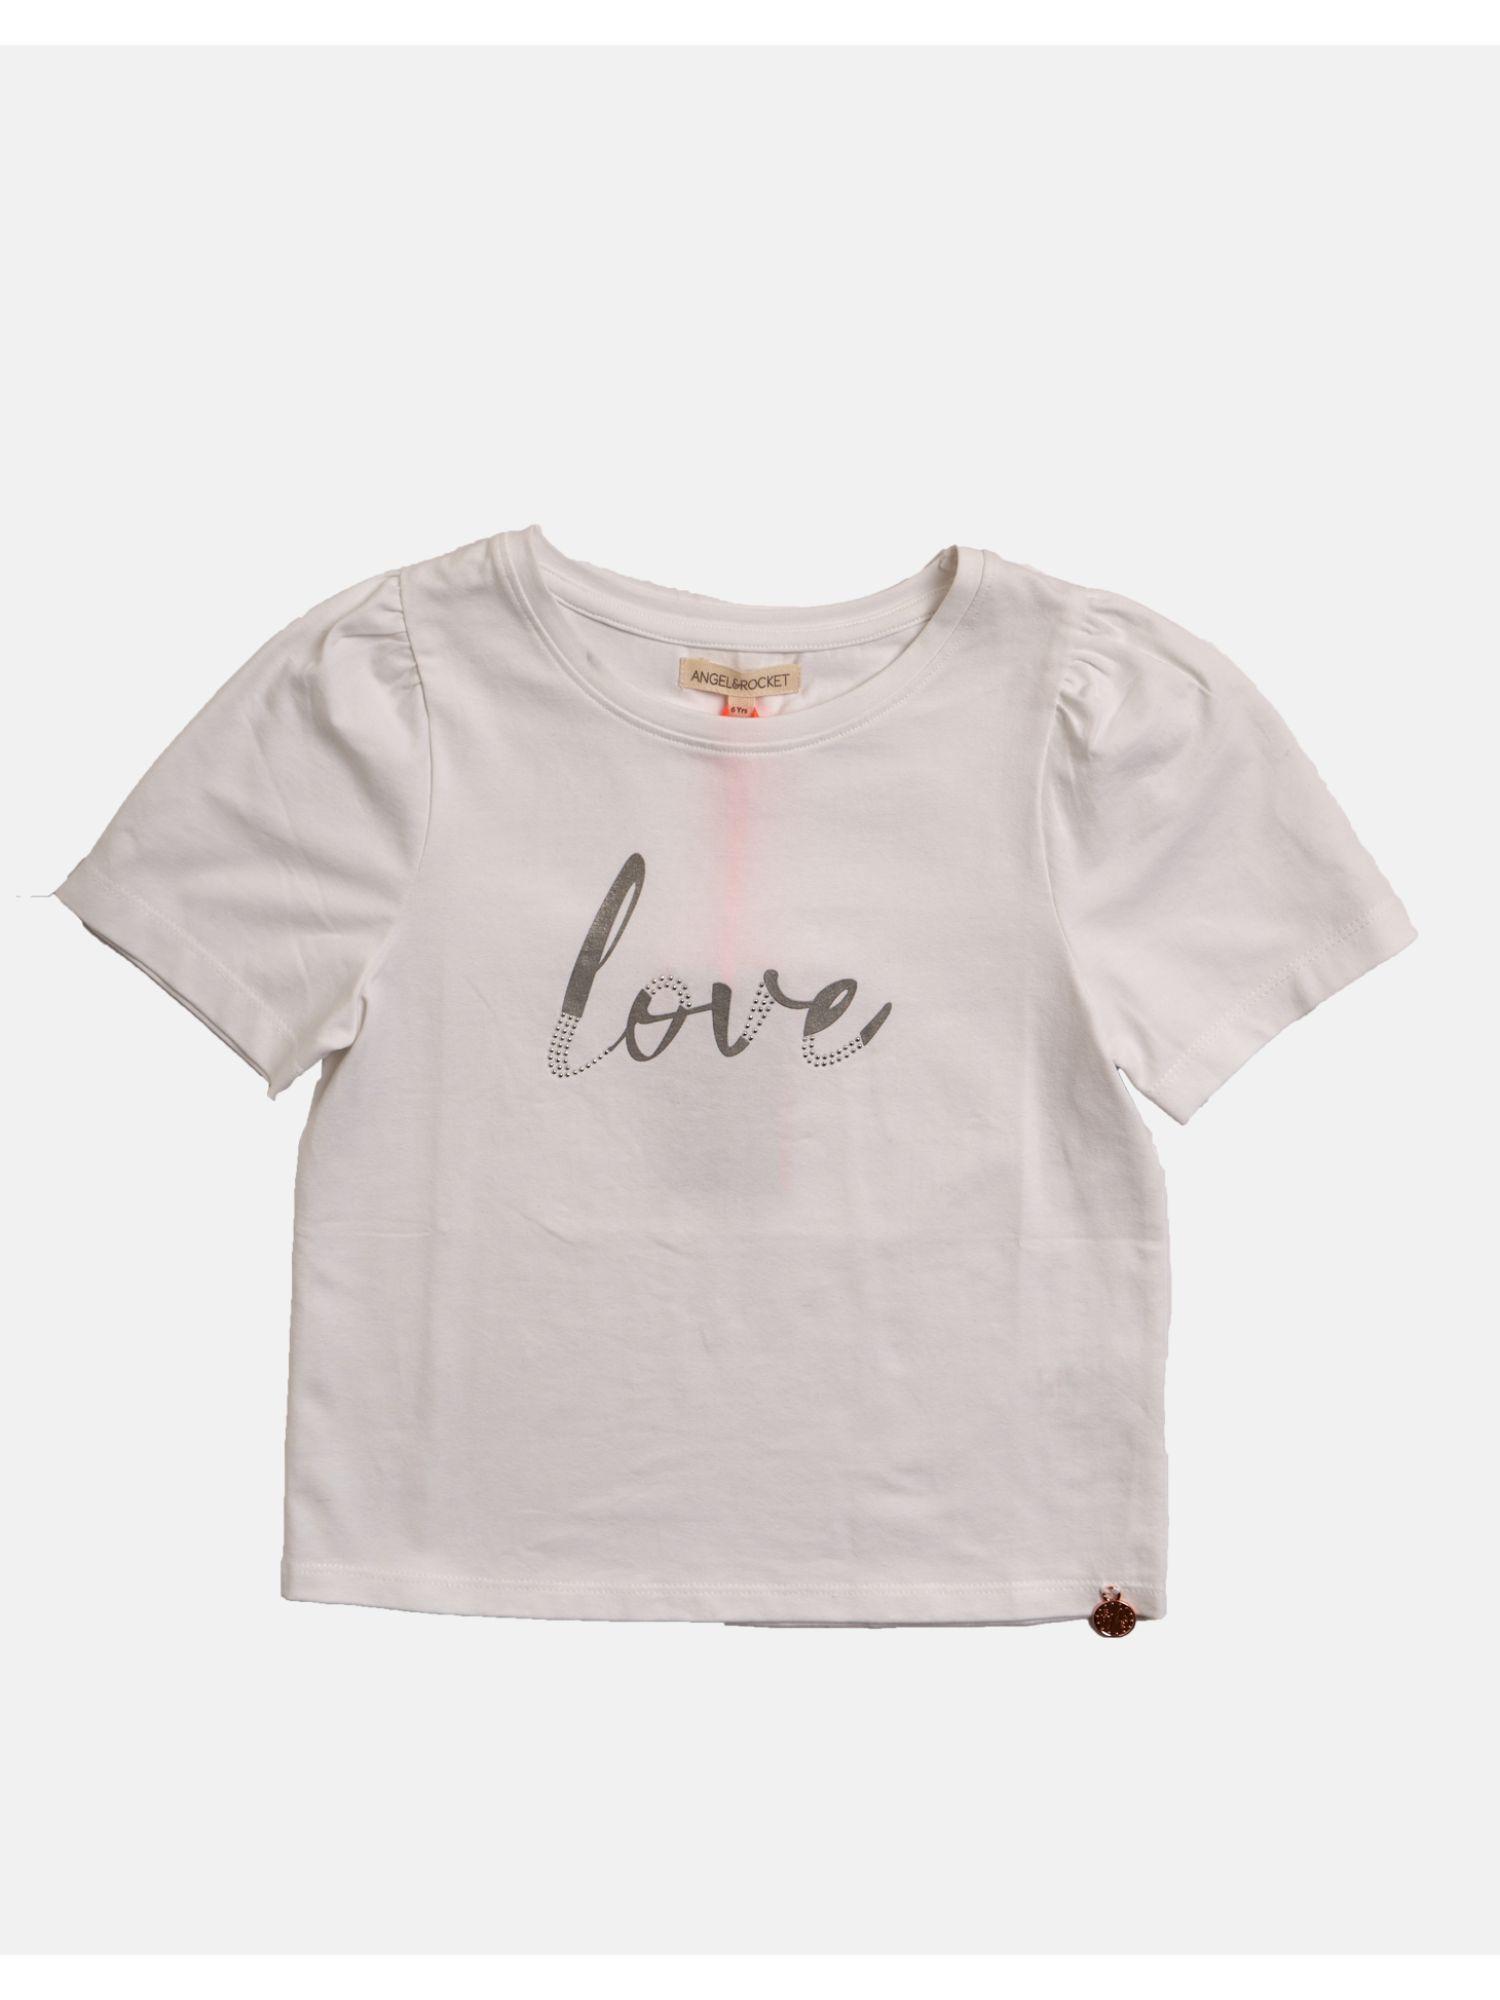 bella love t-shirt